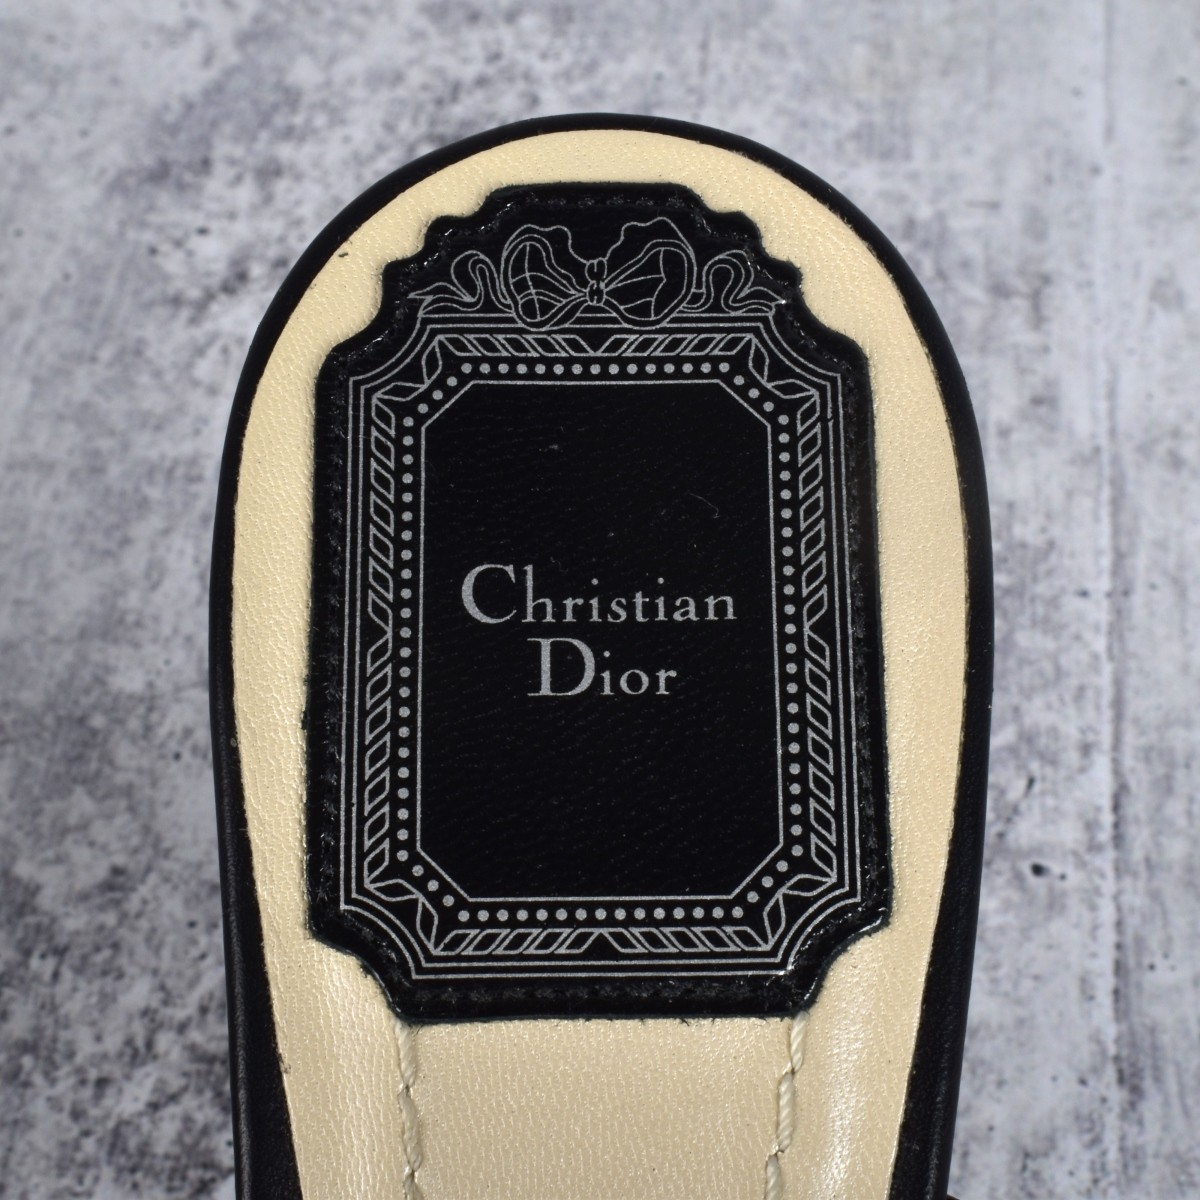 Christian Dior and Prada Ladies Shoes